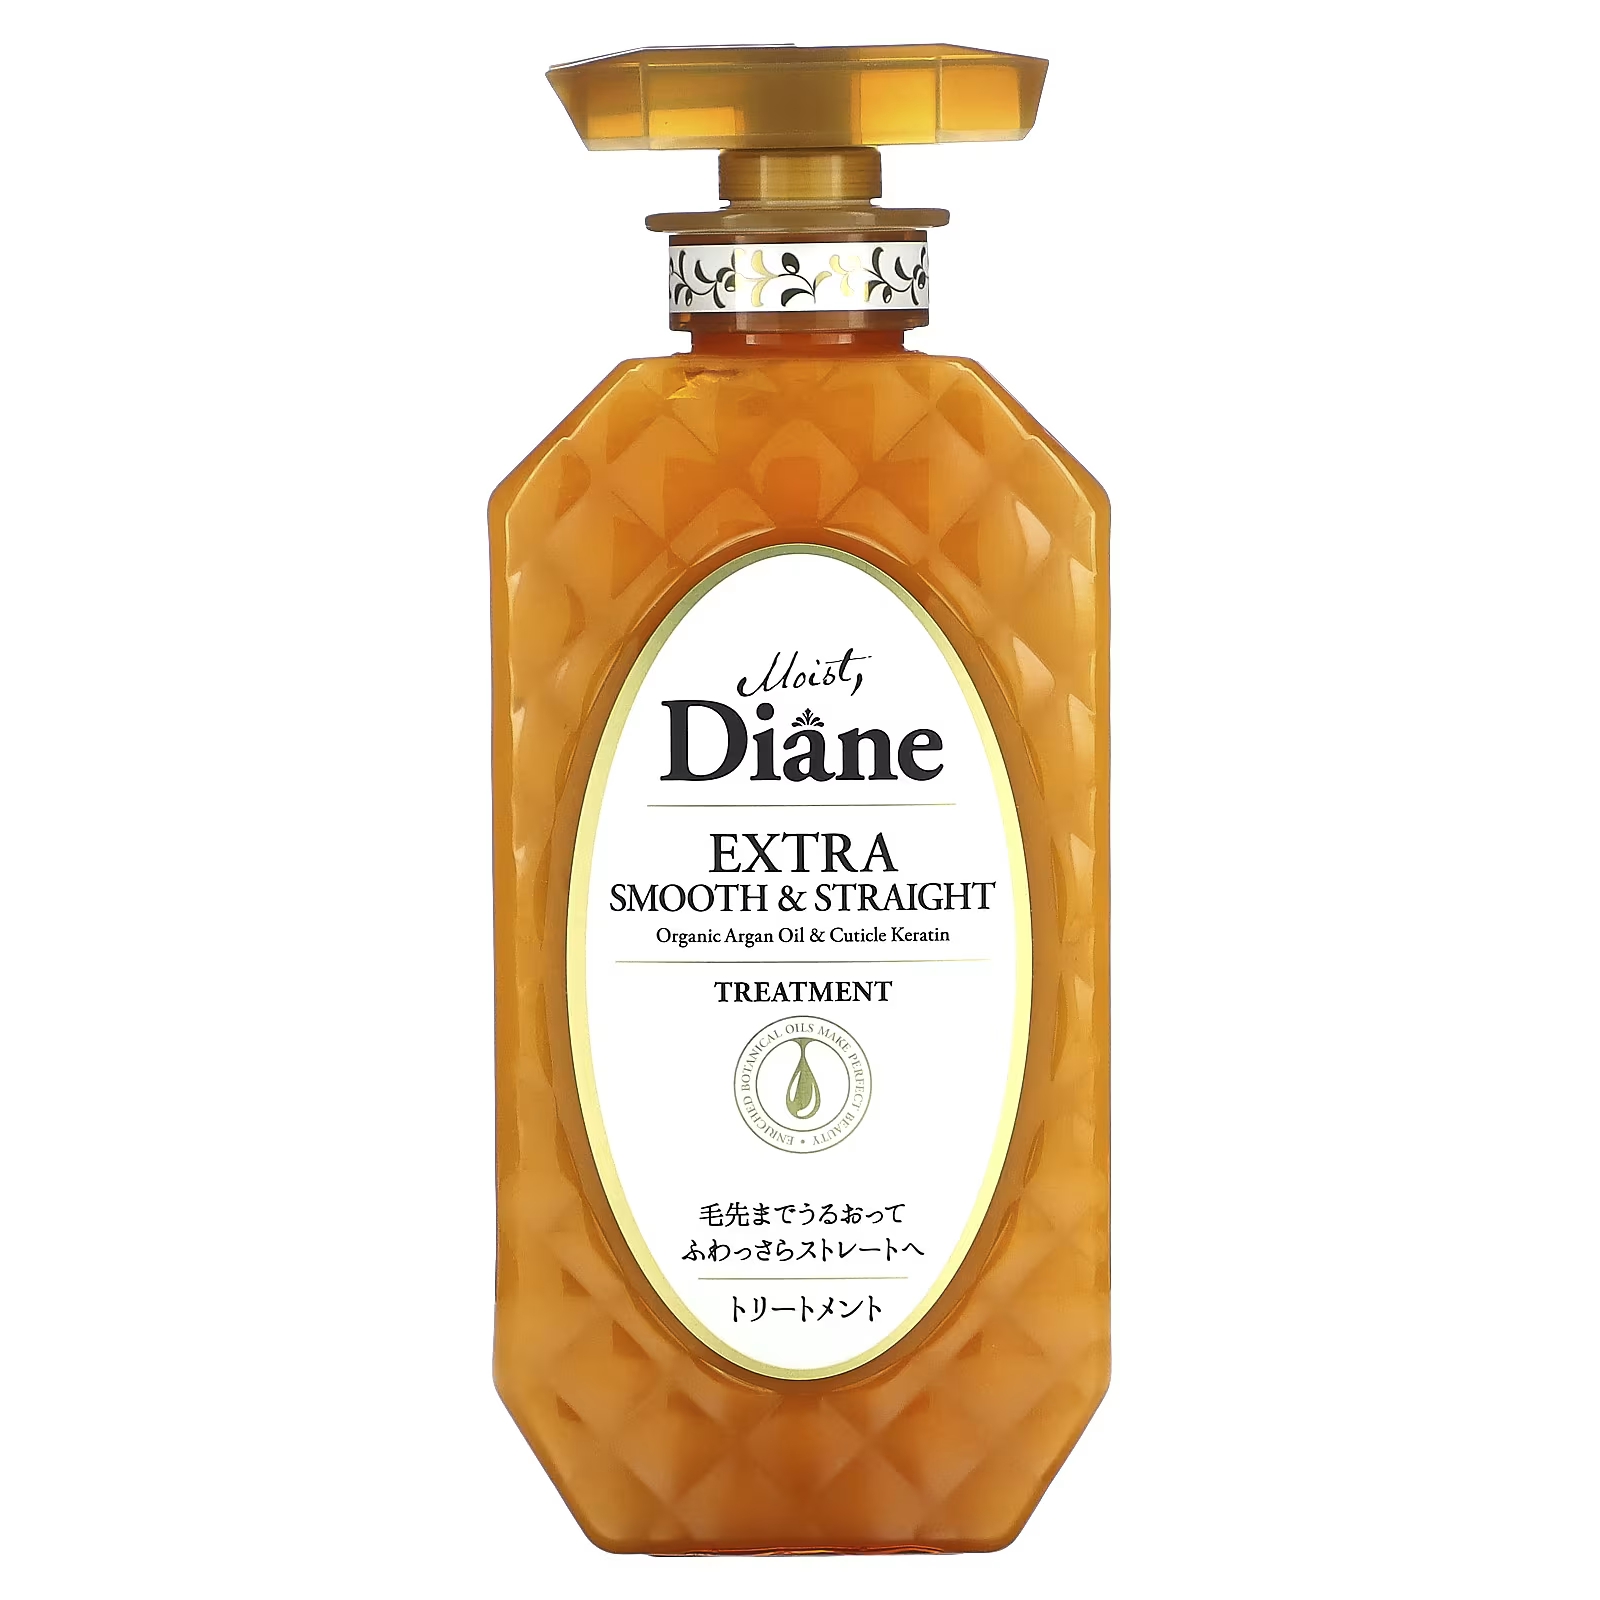 цена Средство для волос Moist Diane Extra Smooth & Straight Treatment, 459 мл